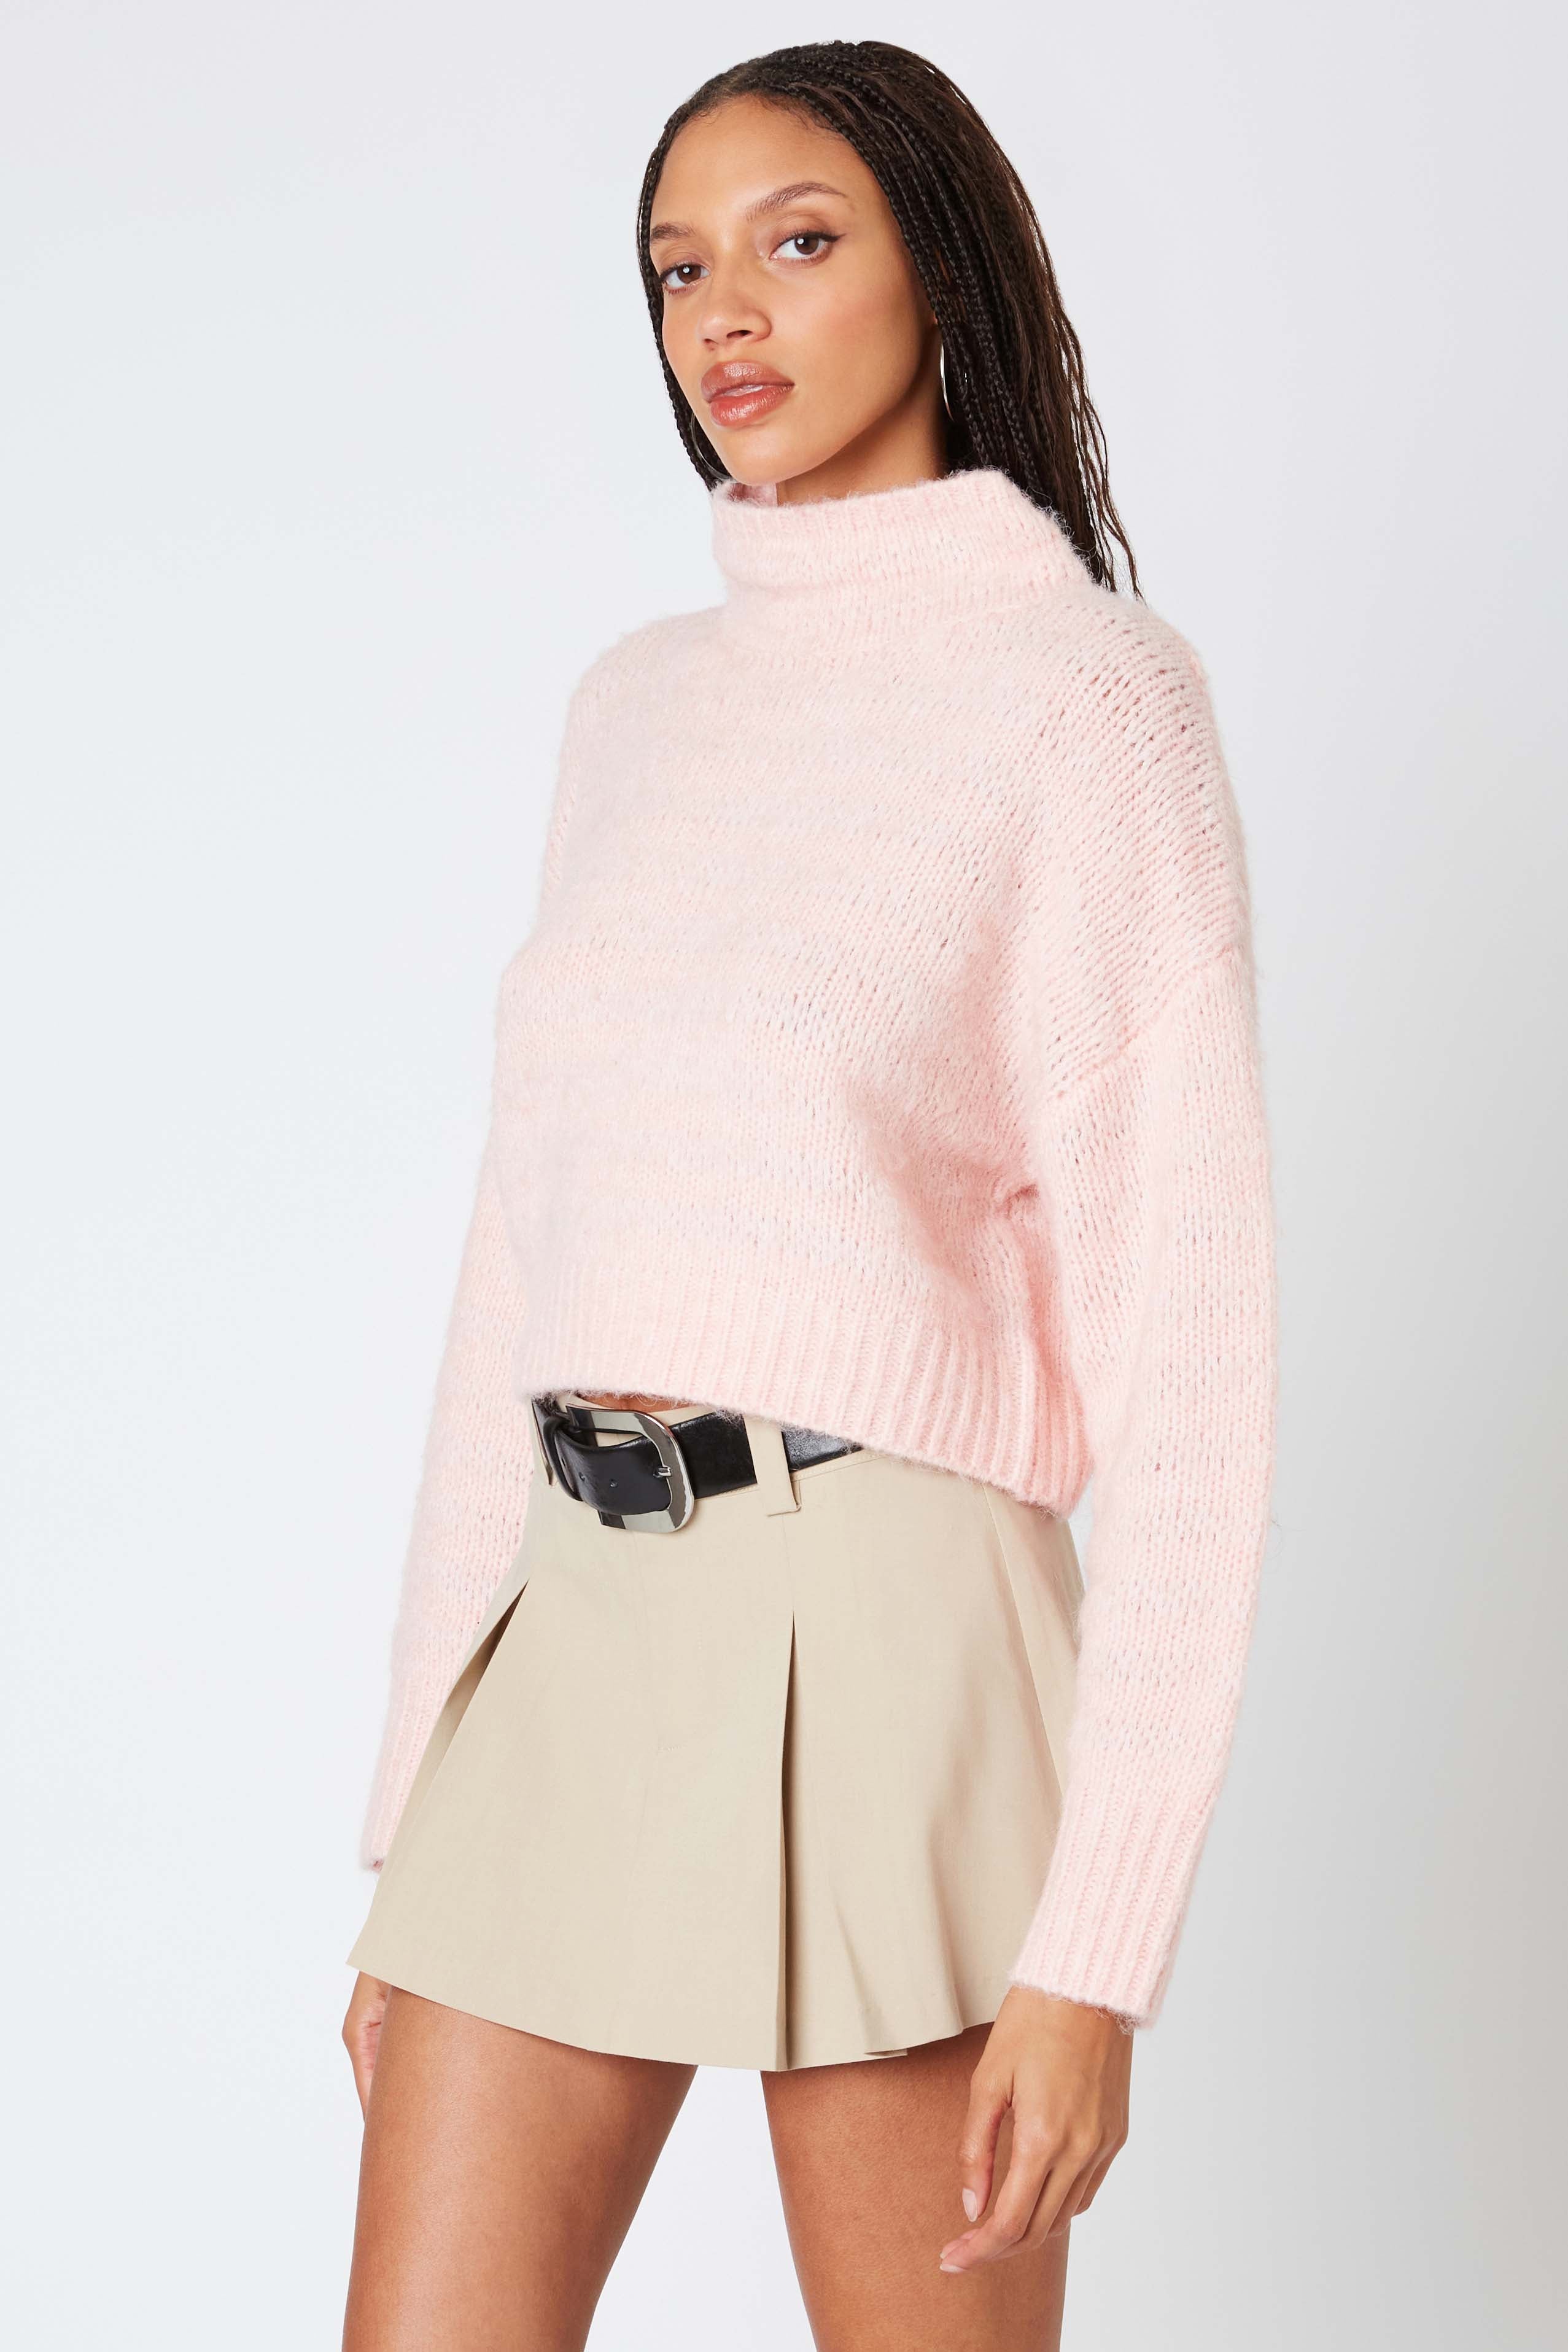 Mockneck Sweater in Blush Side View